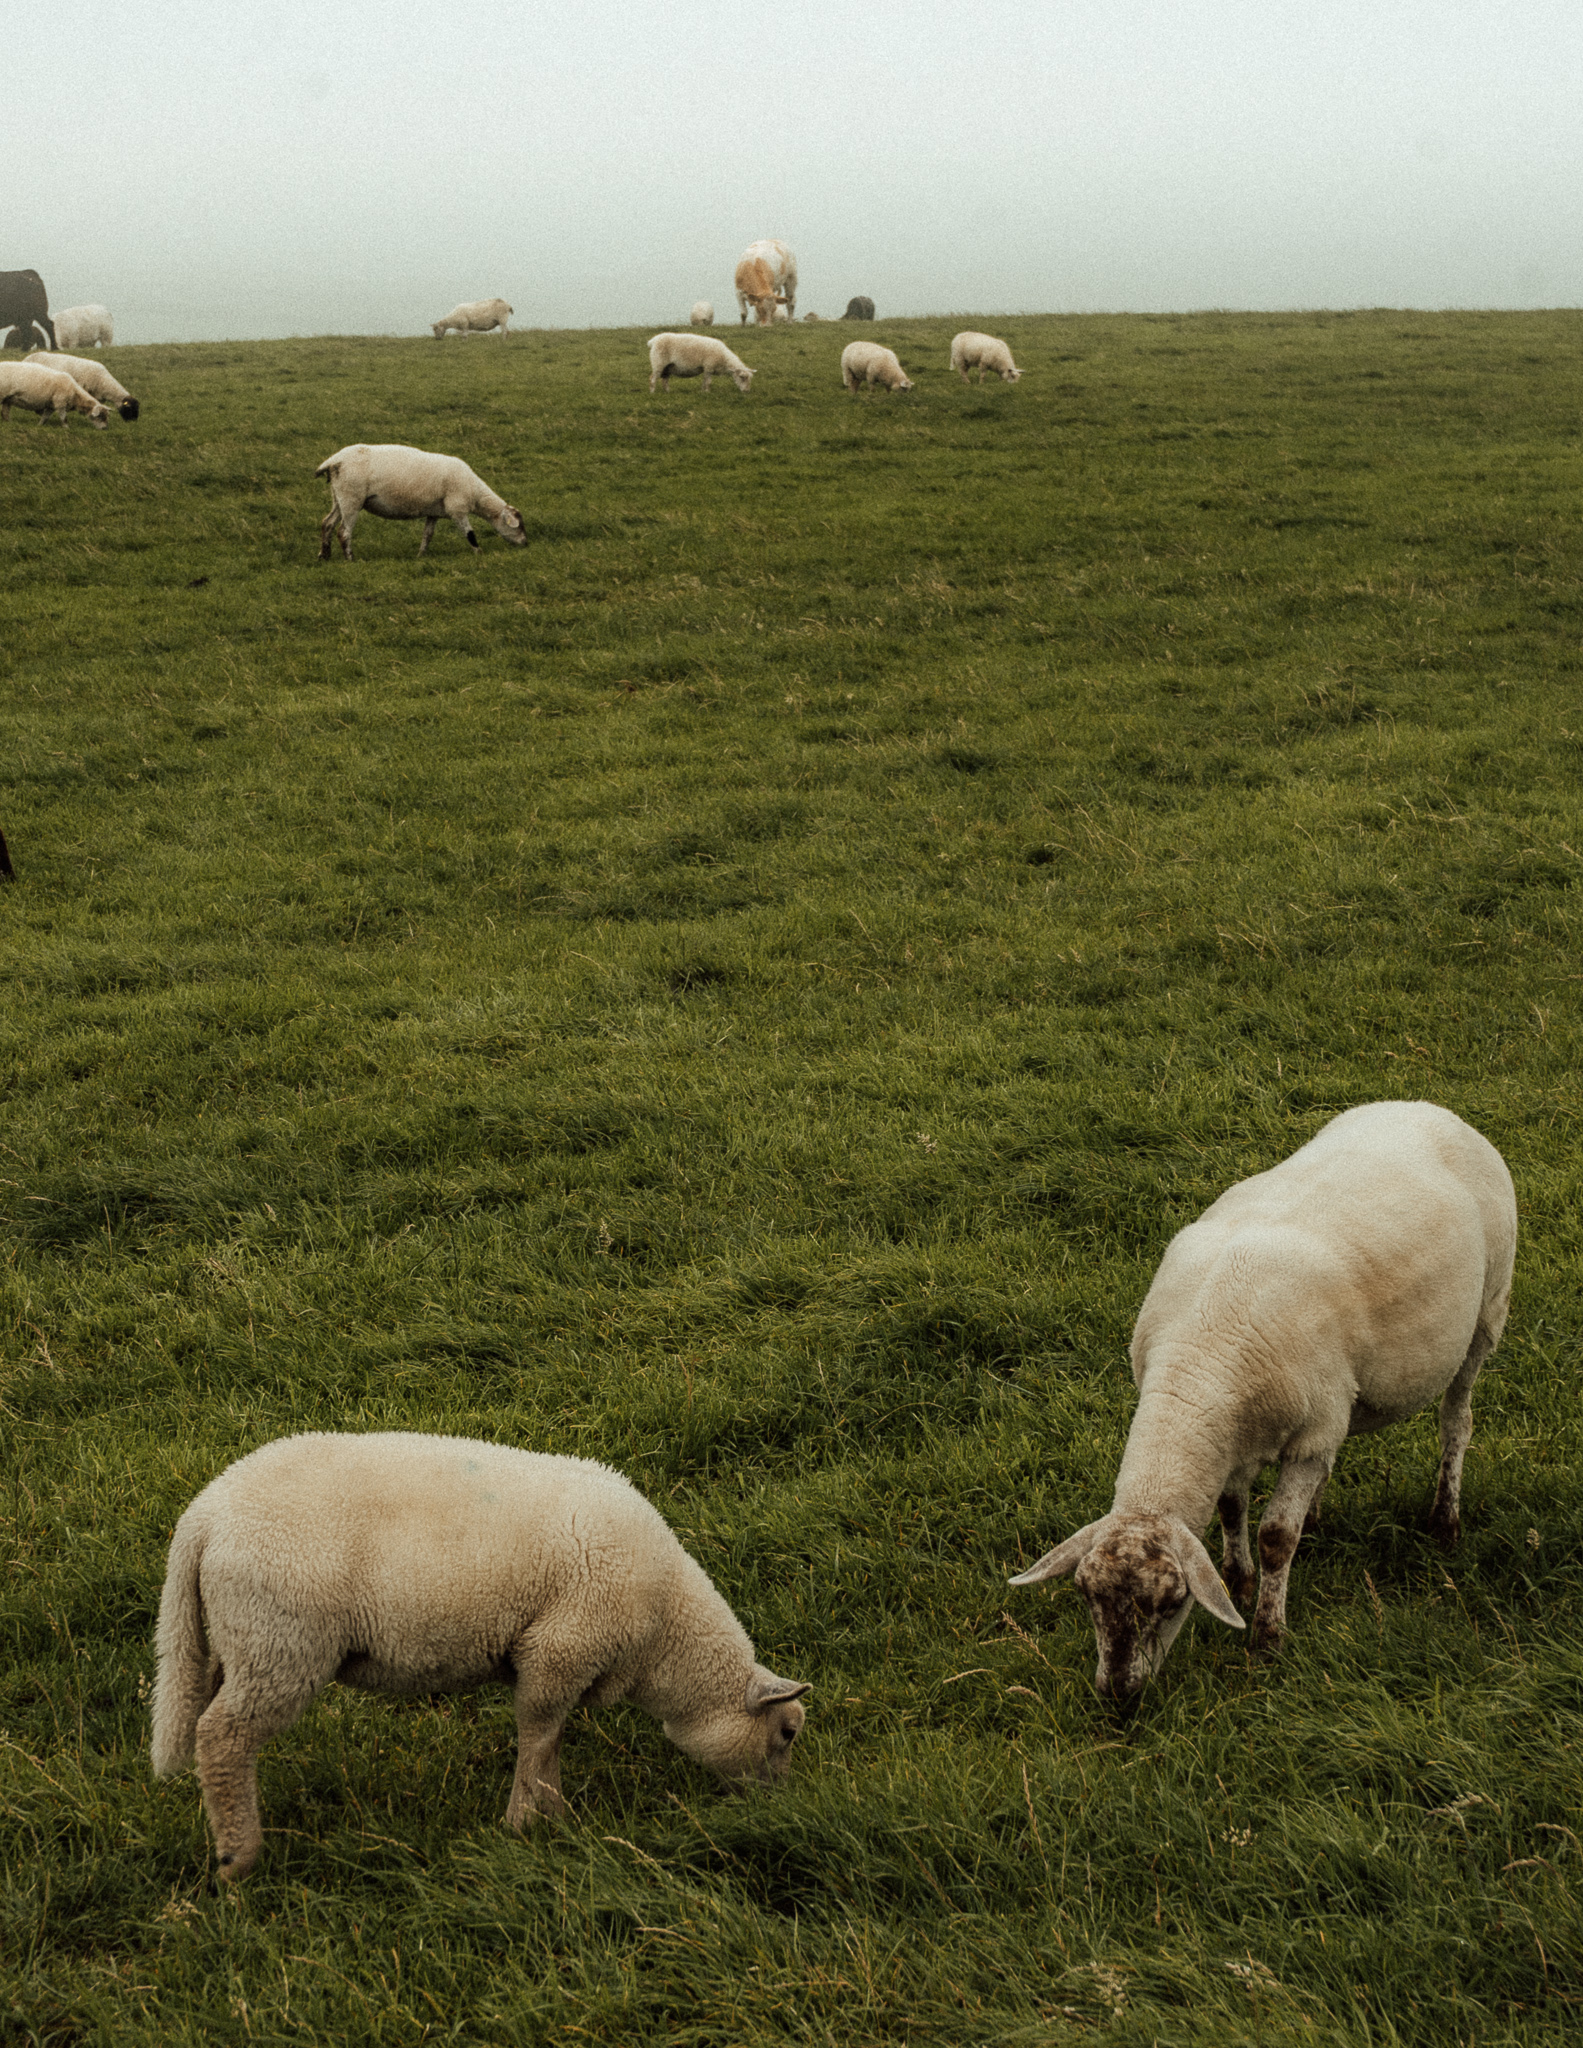 sheep in a grassy field in ireland